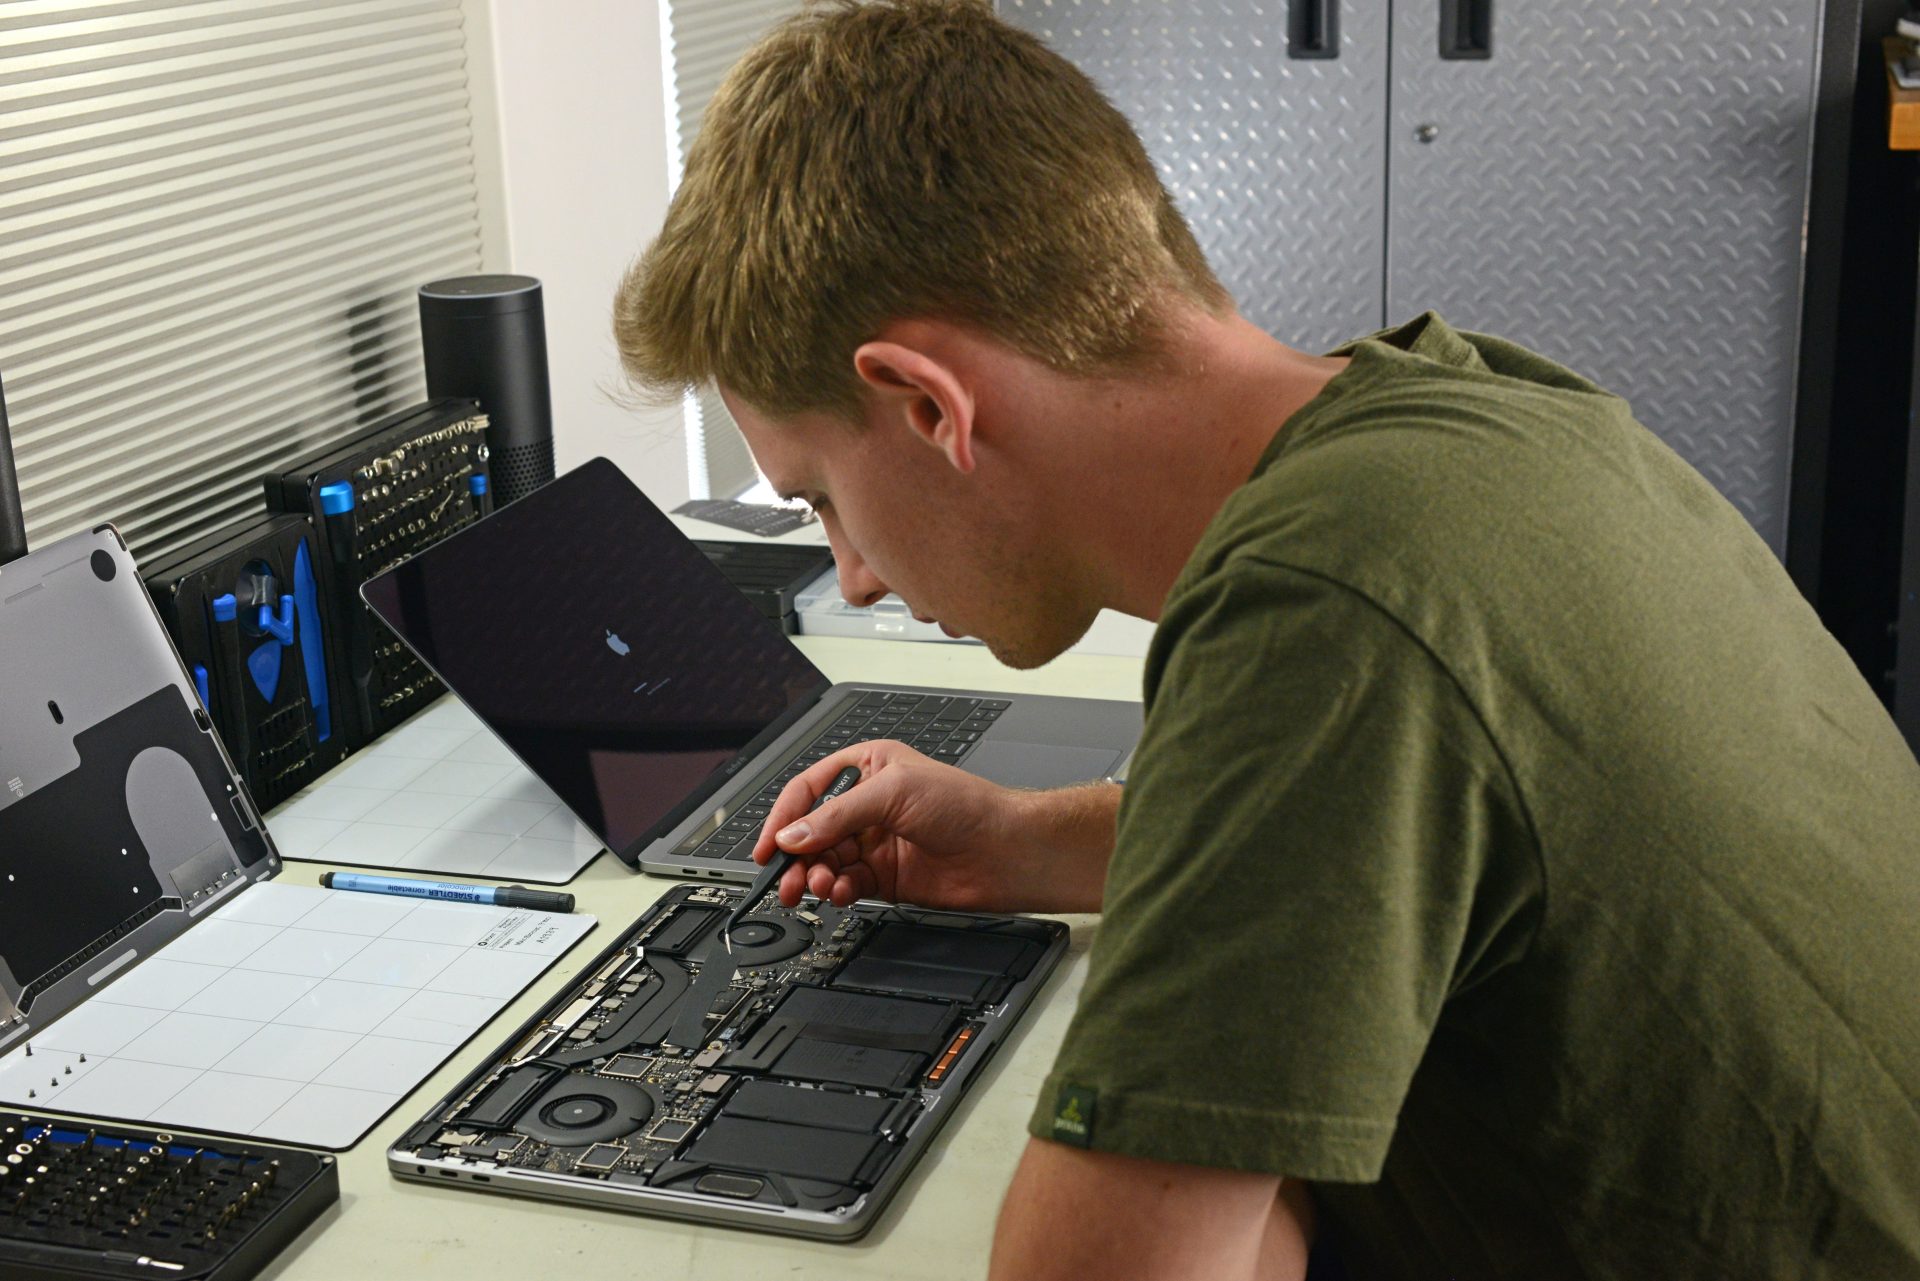 MacBook repair services